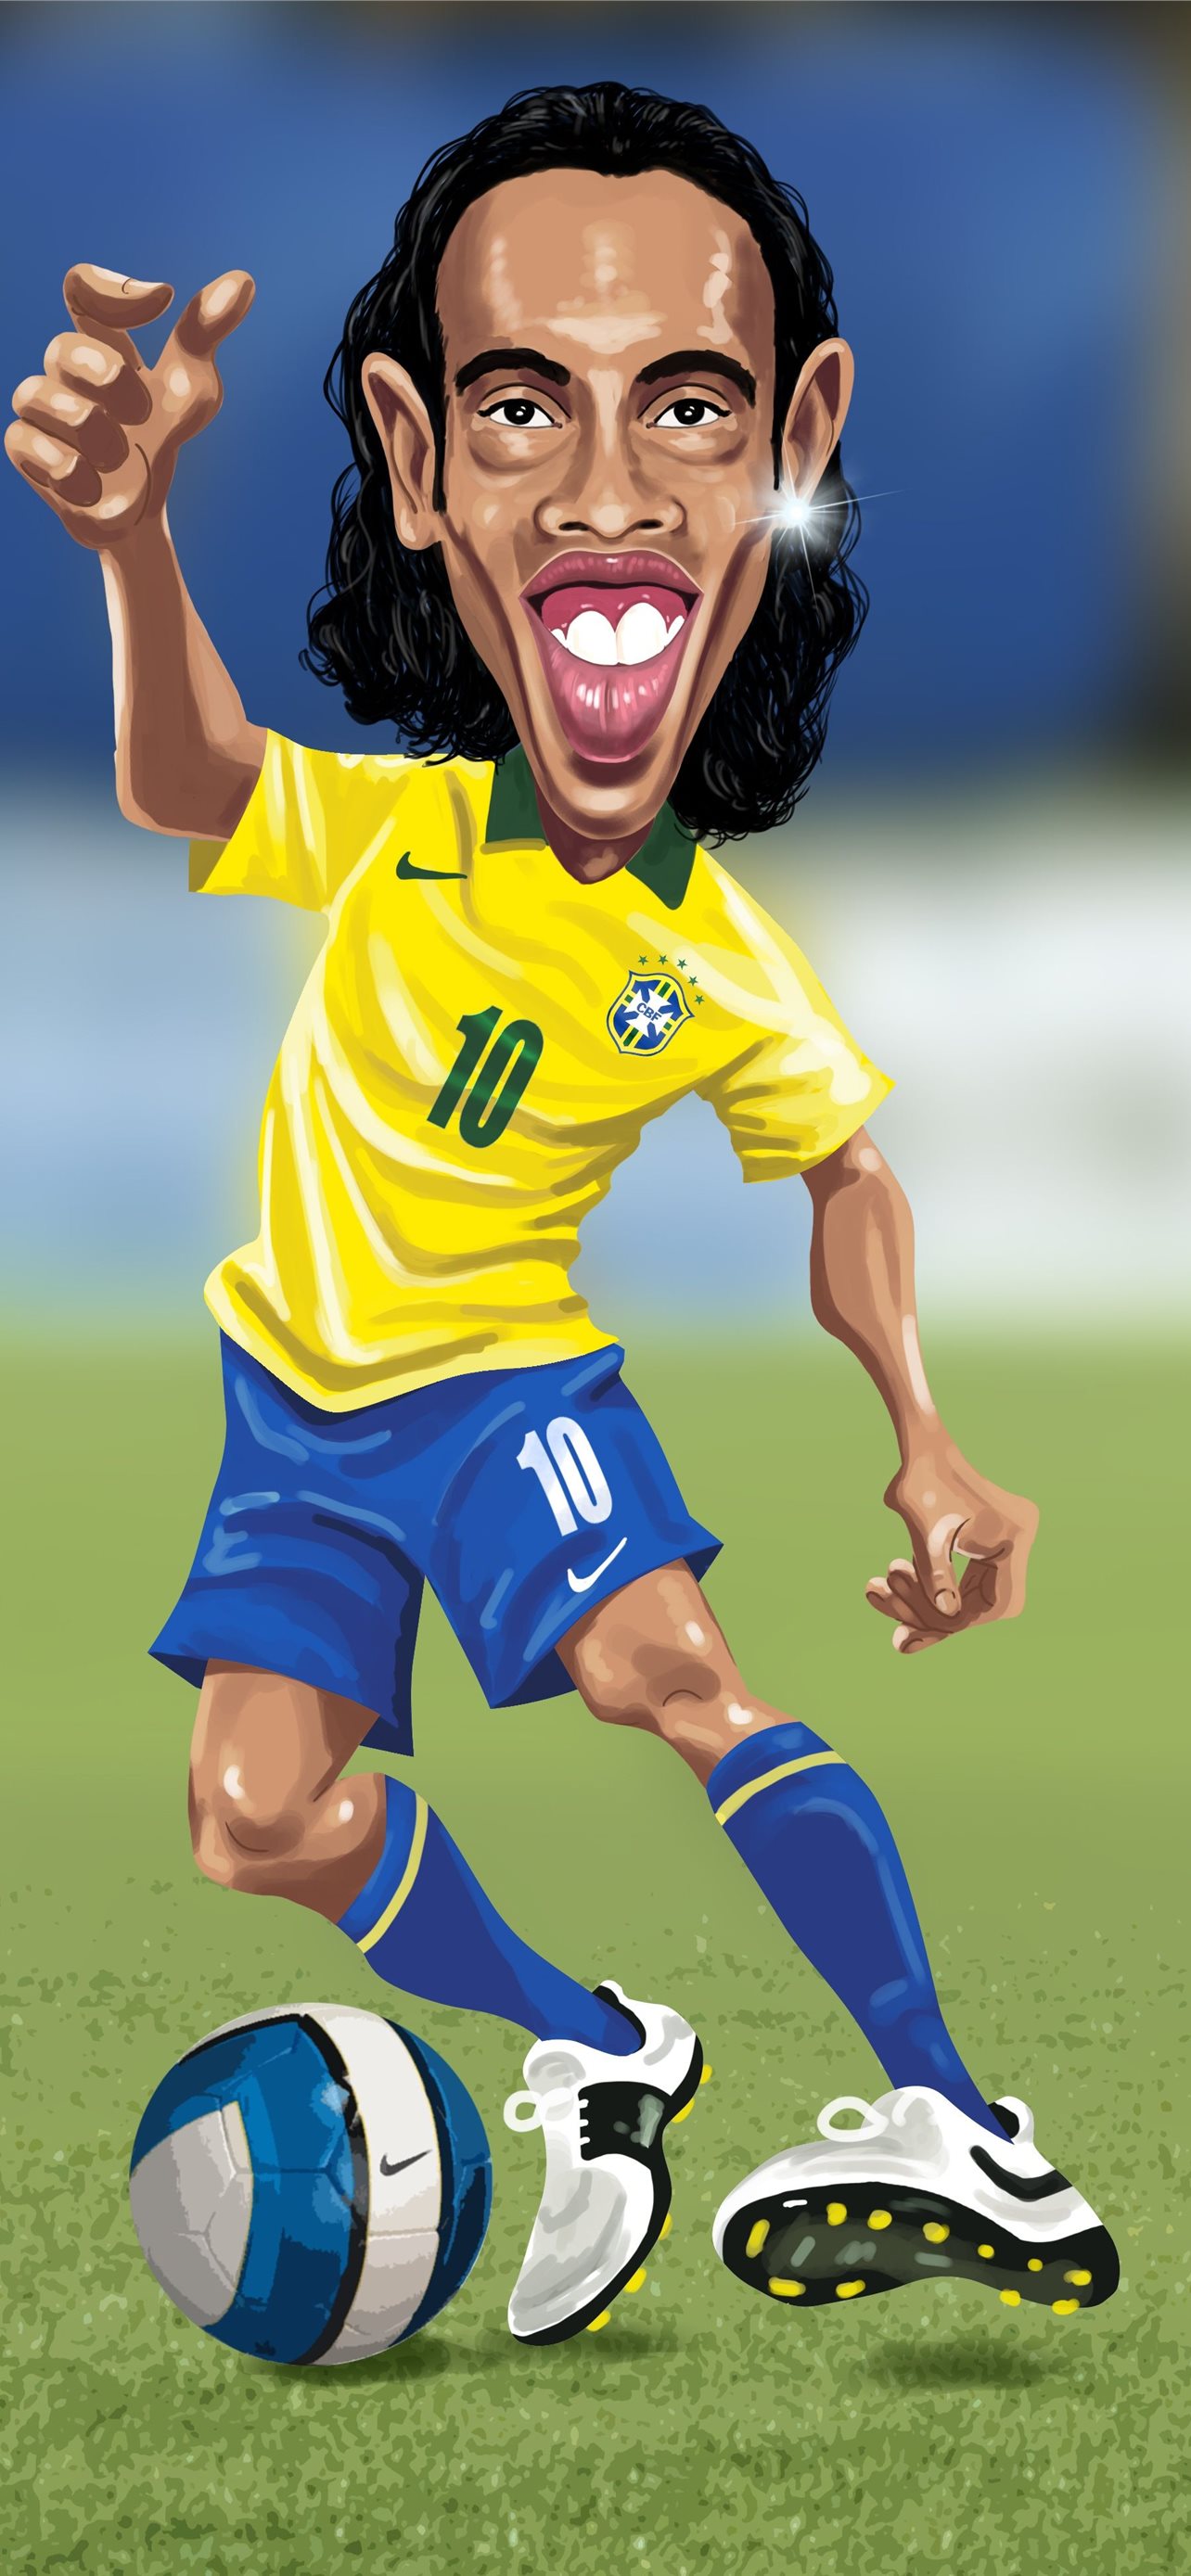 Ronaldinho  wallpaper  Ronaldinho wallpapers Brazil football team  Soccer photography